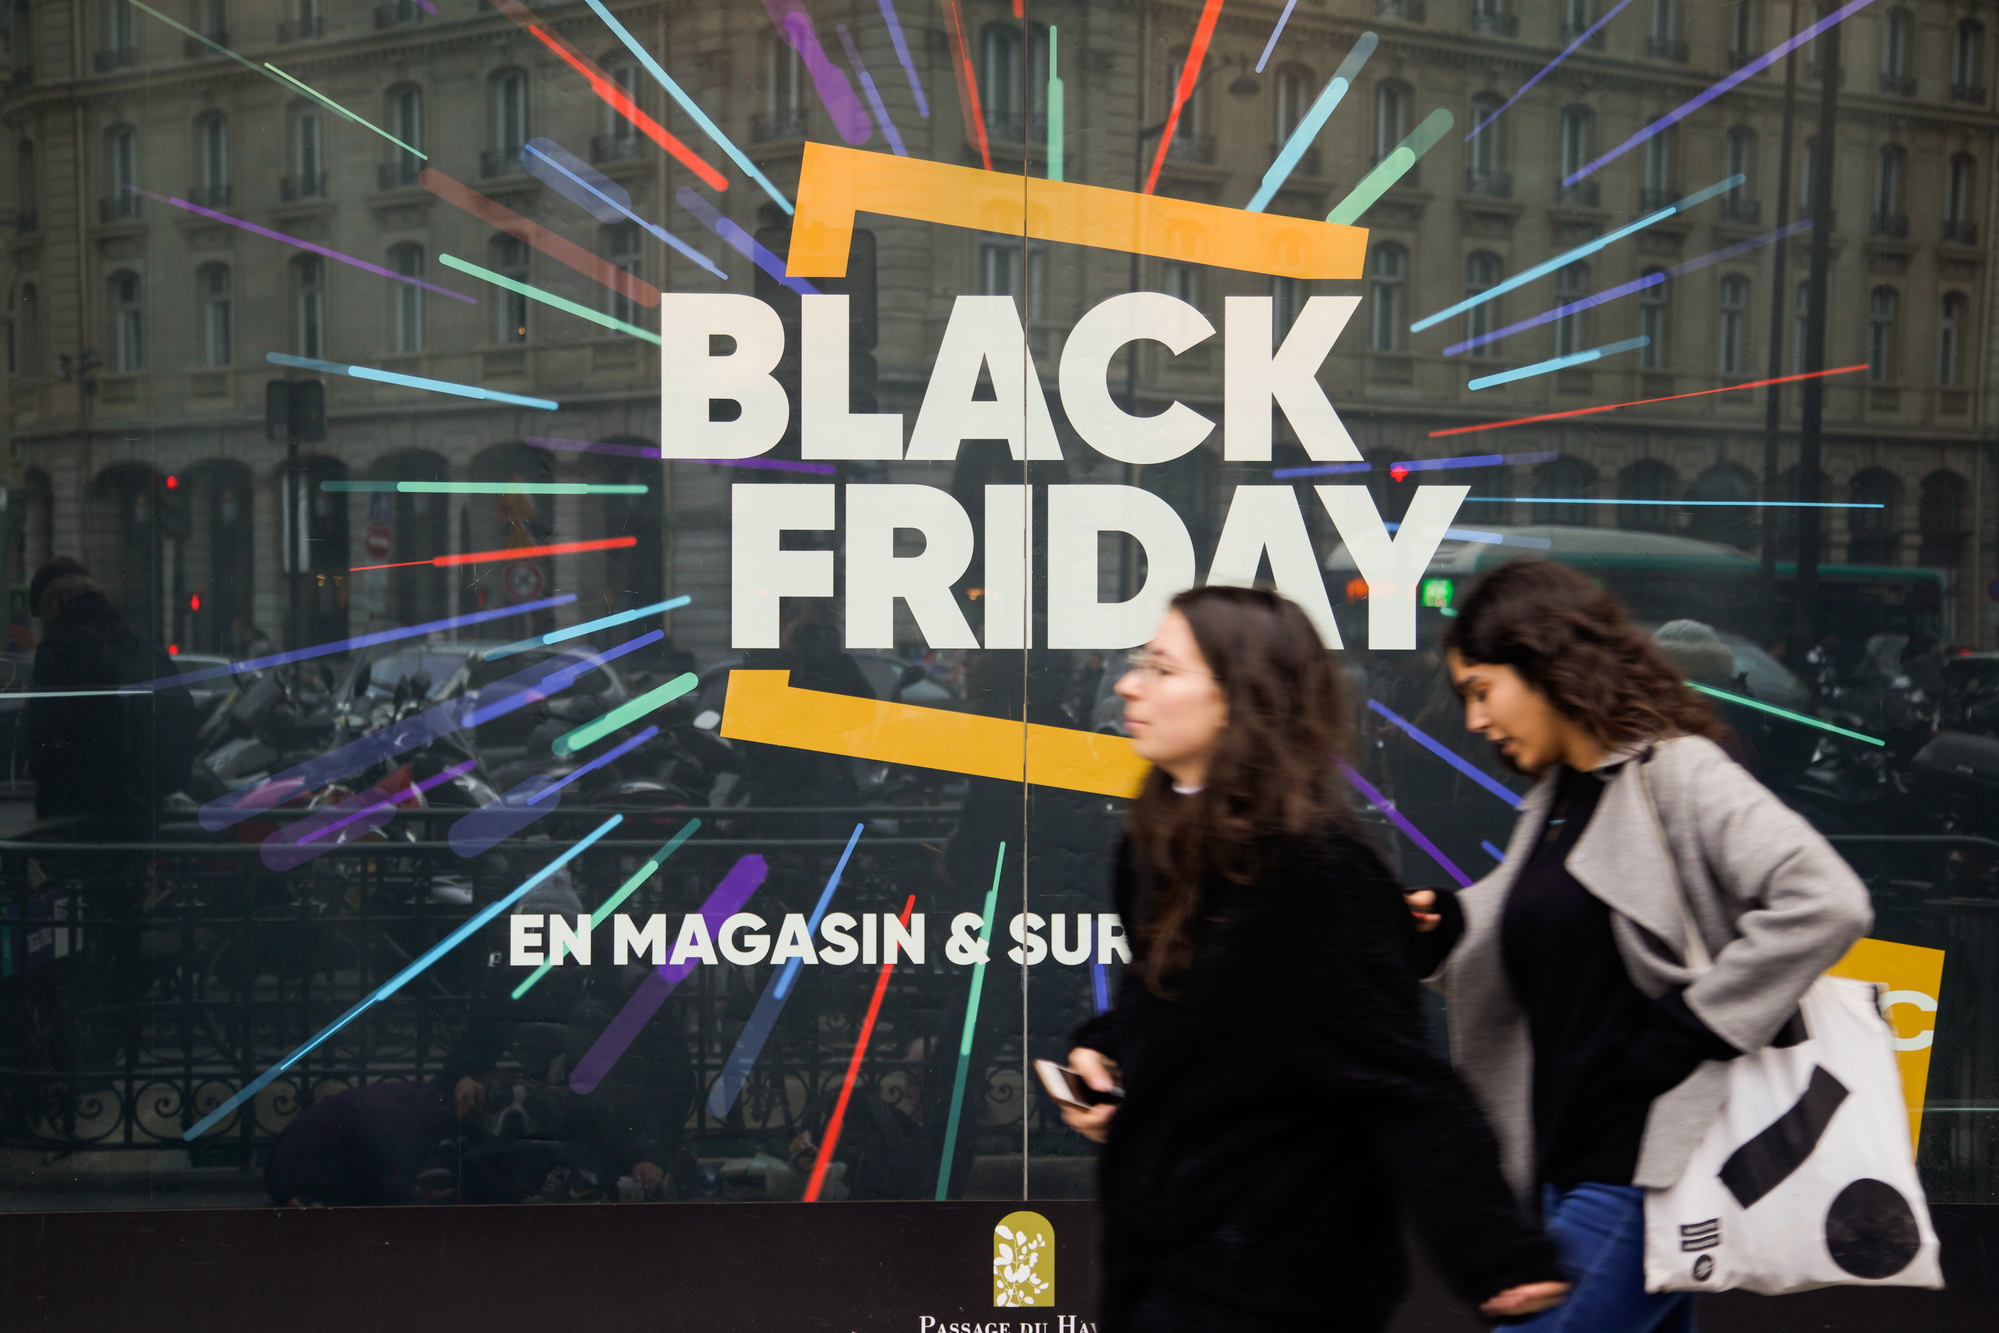 Commerce : le black Friday booste les offres vpn